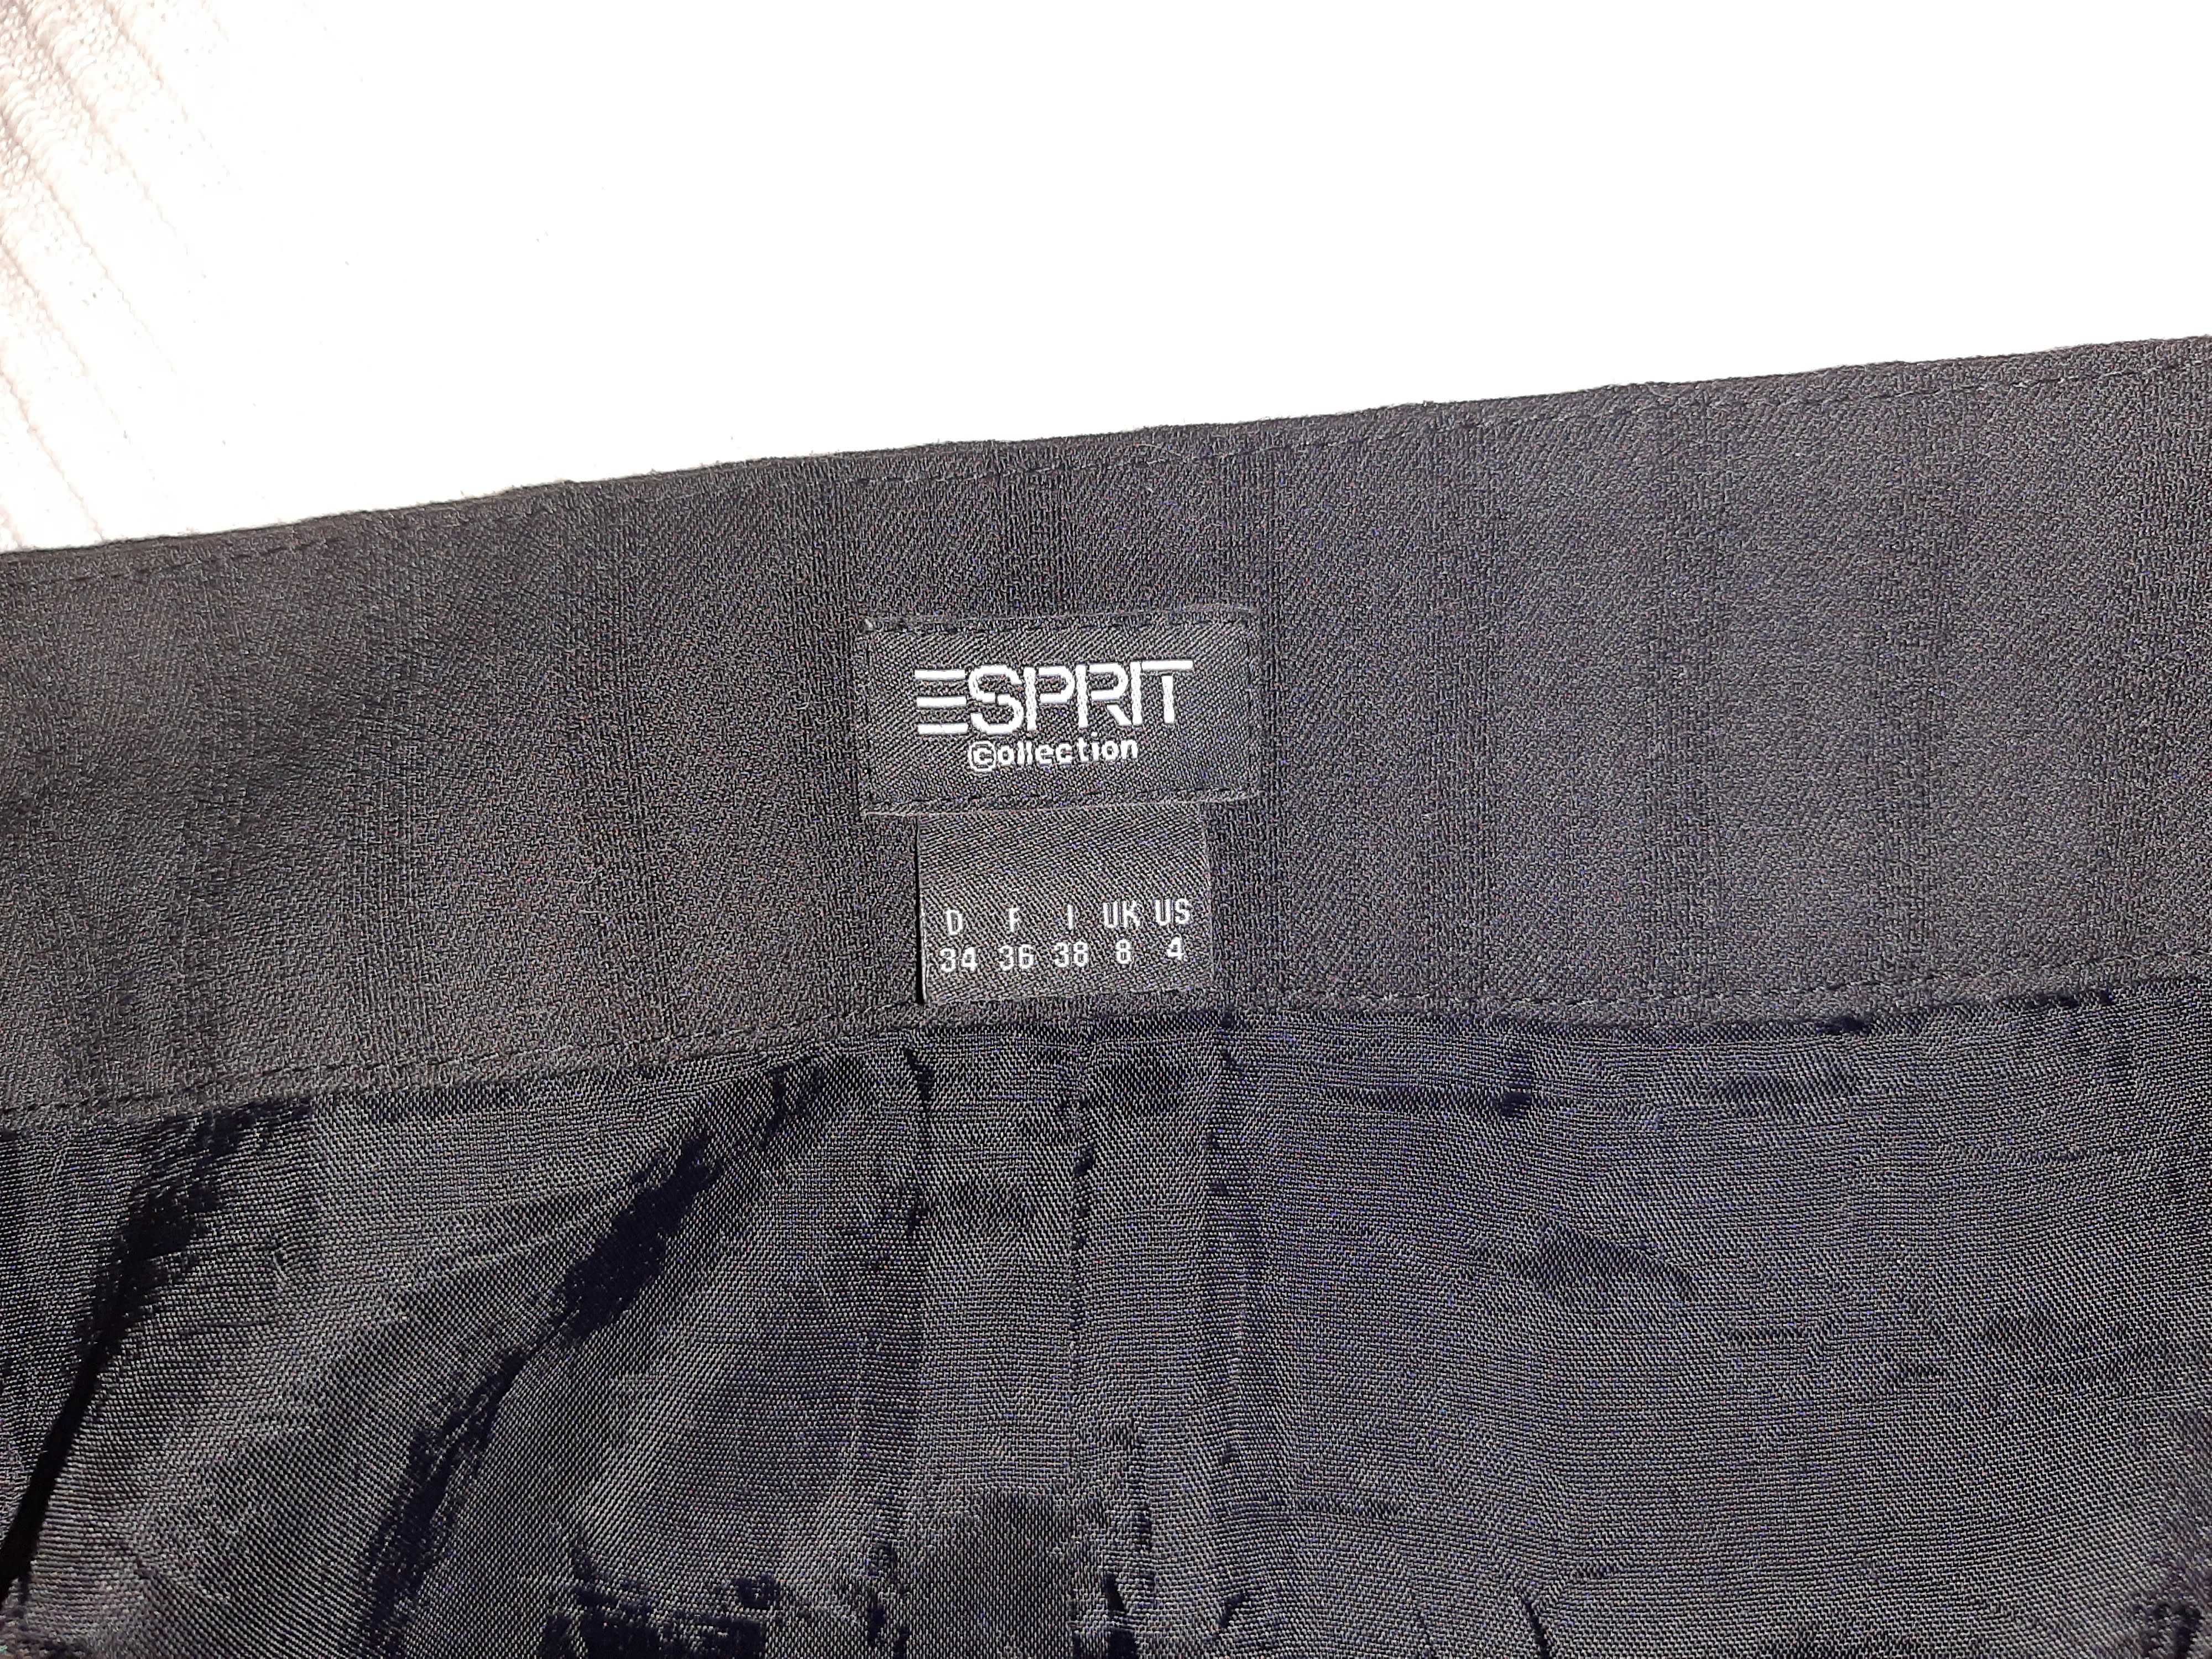 Czarna spódnica Esprit rozmiar S/36